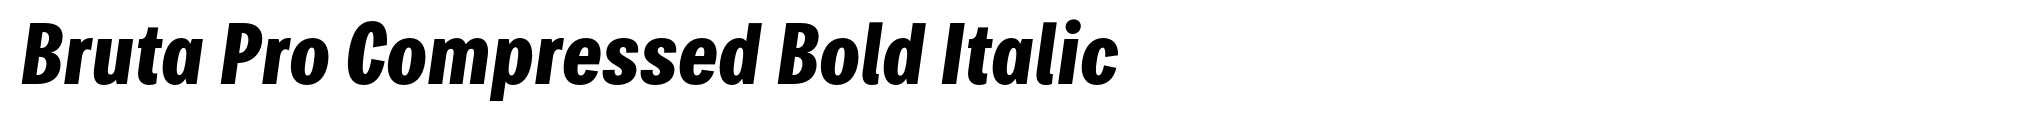 Bruta Pro Compressed Bold Italic image